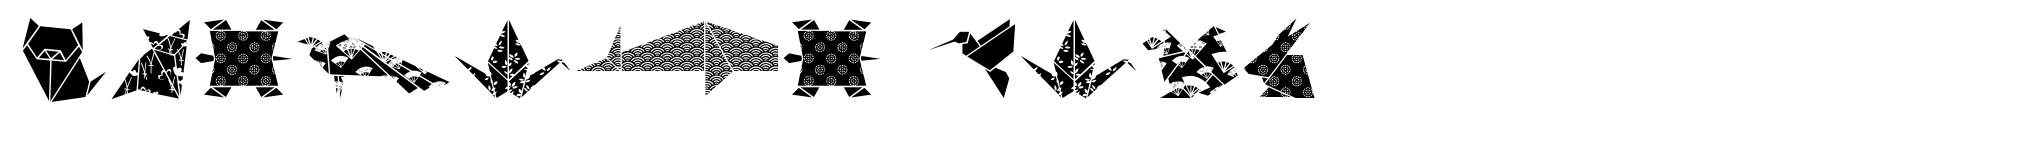 Origami Bats image